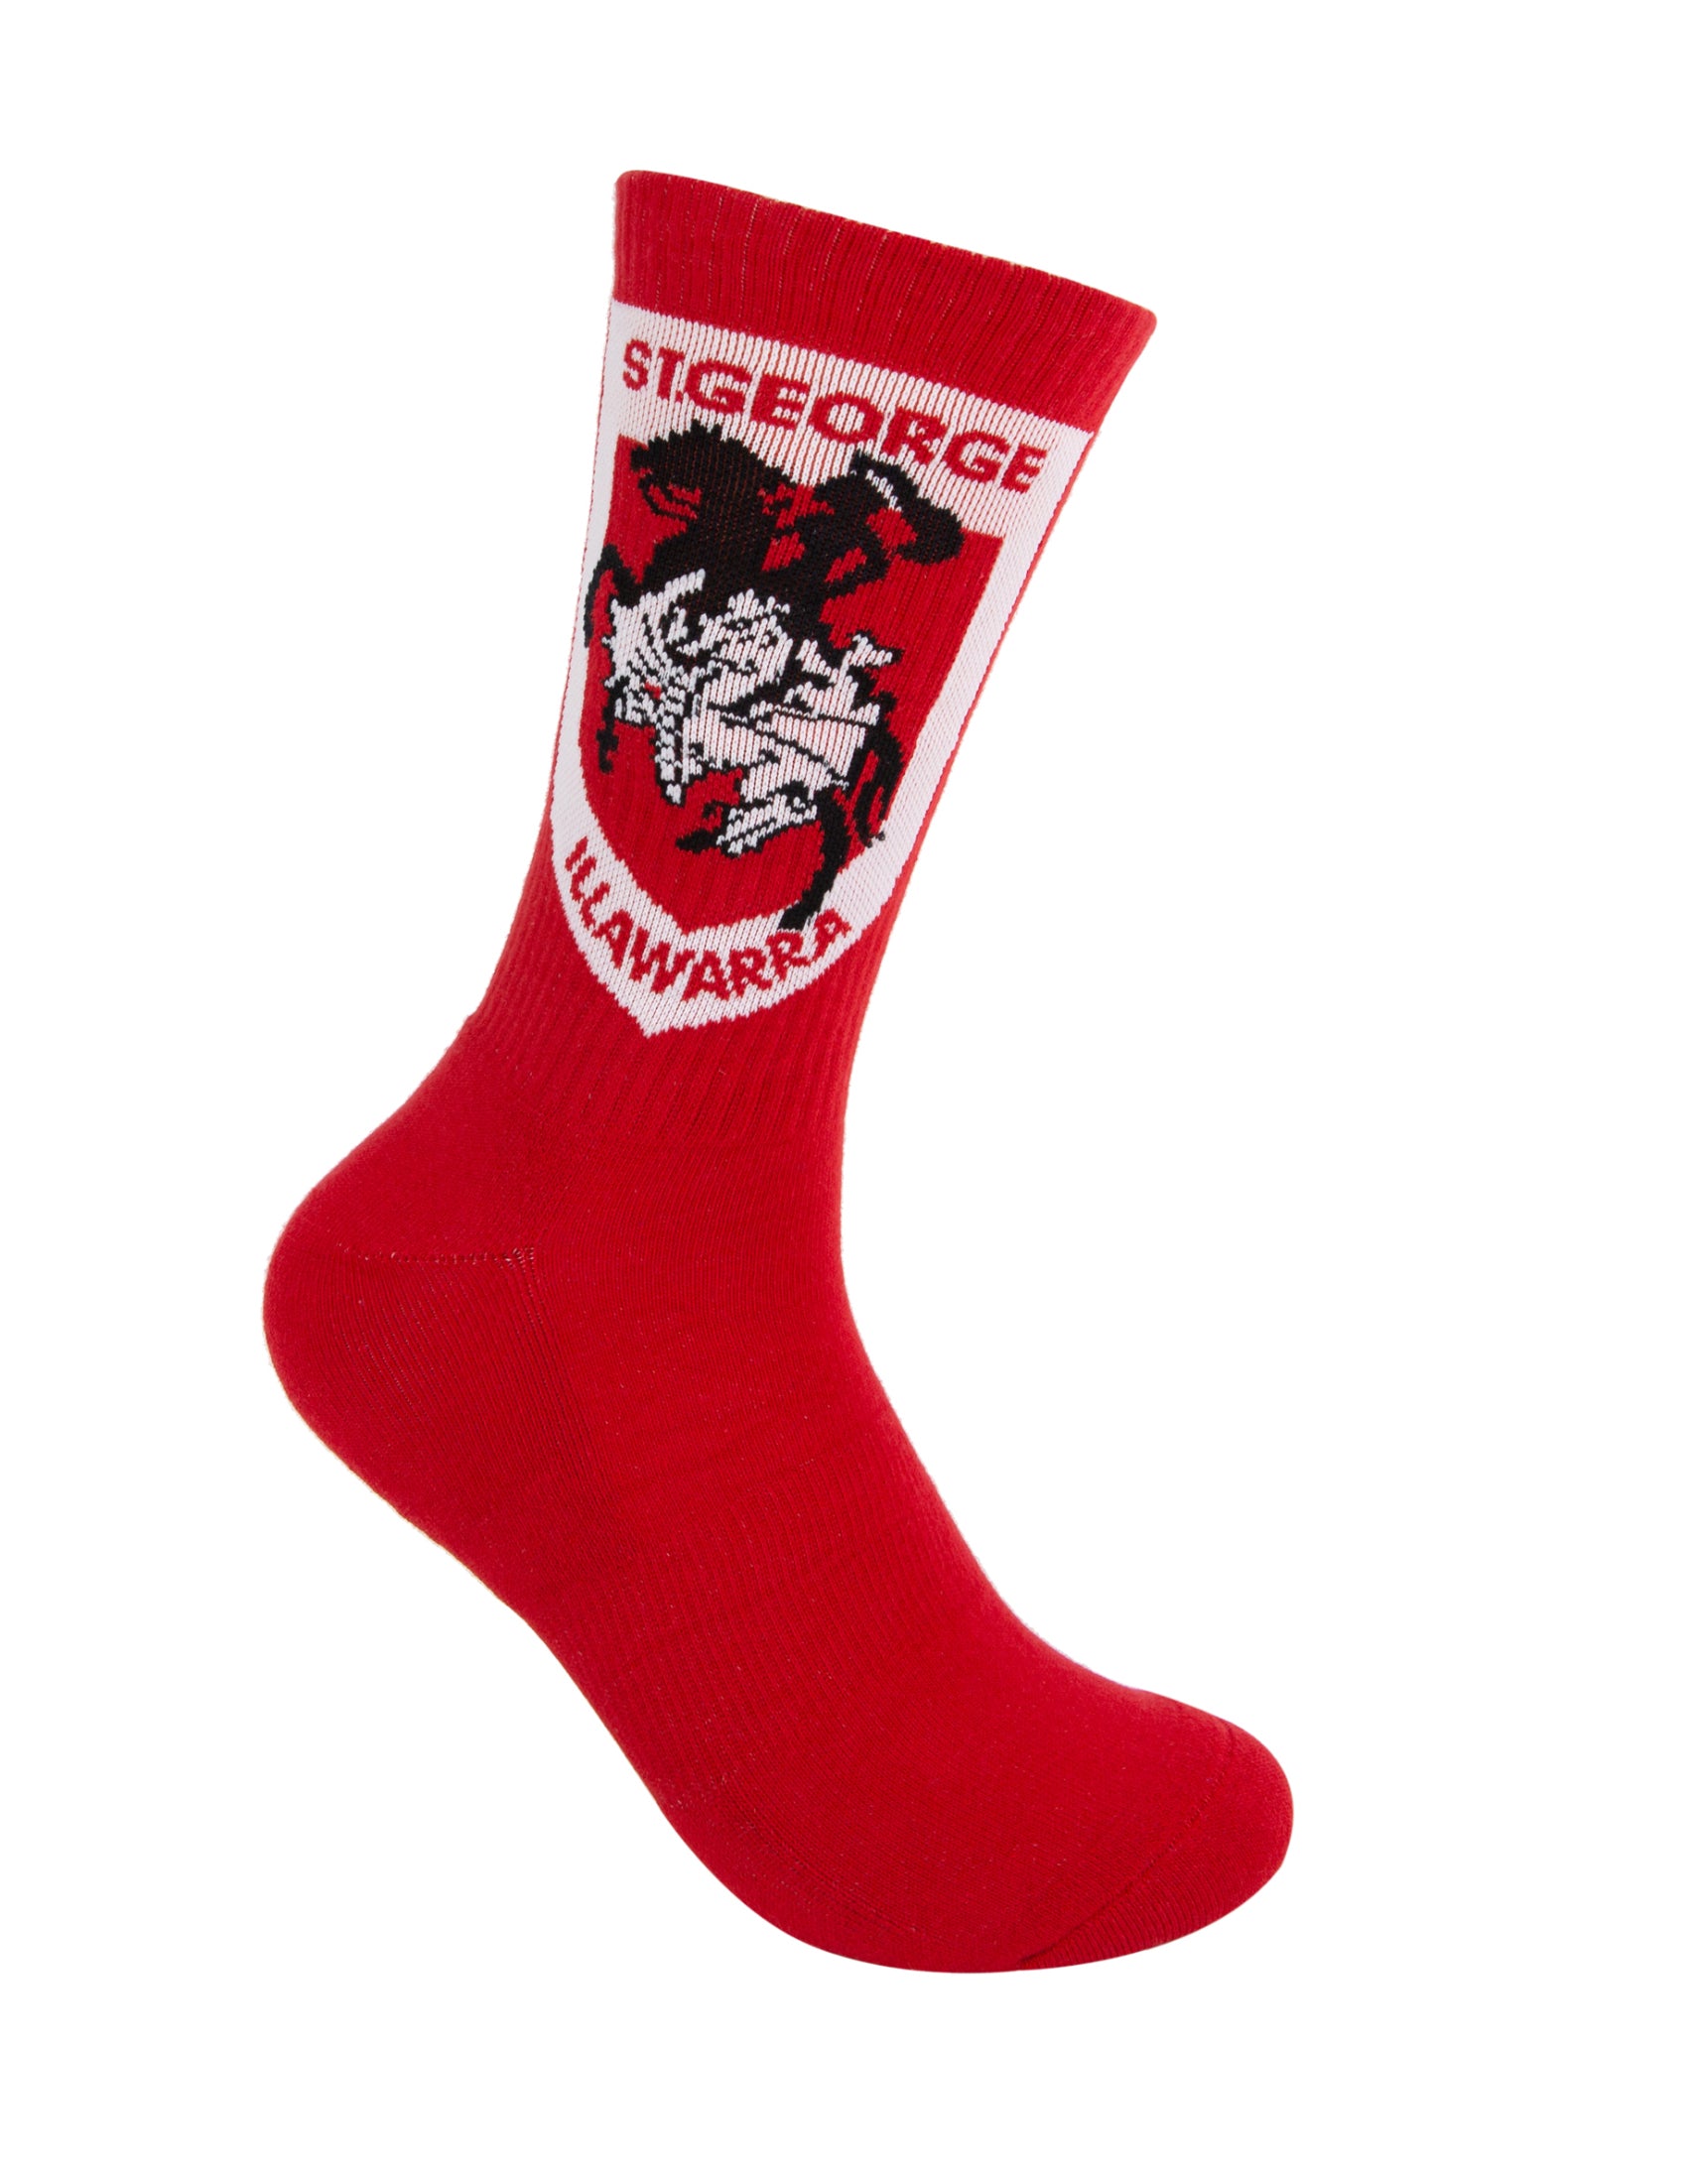 St George Illawarra Dragons Icons Sneaker Socks 2 Pack